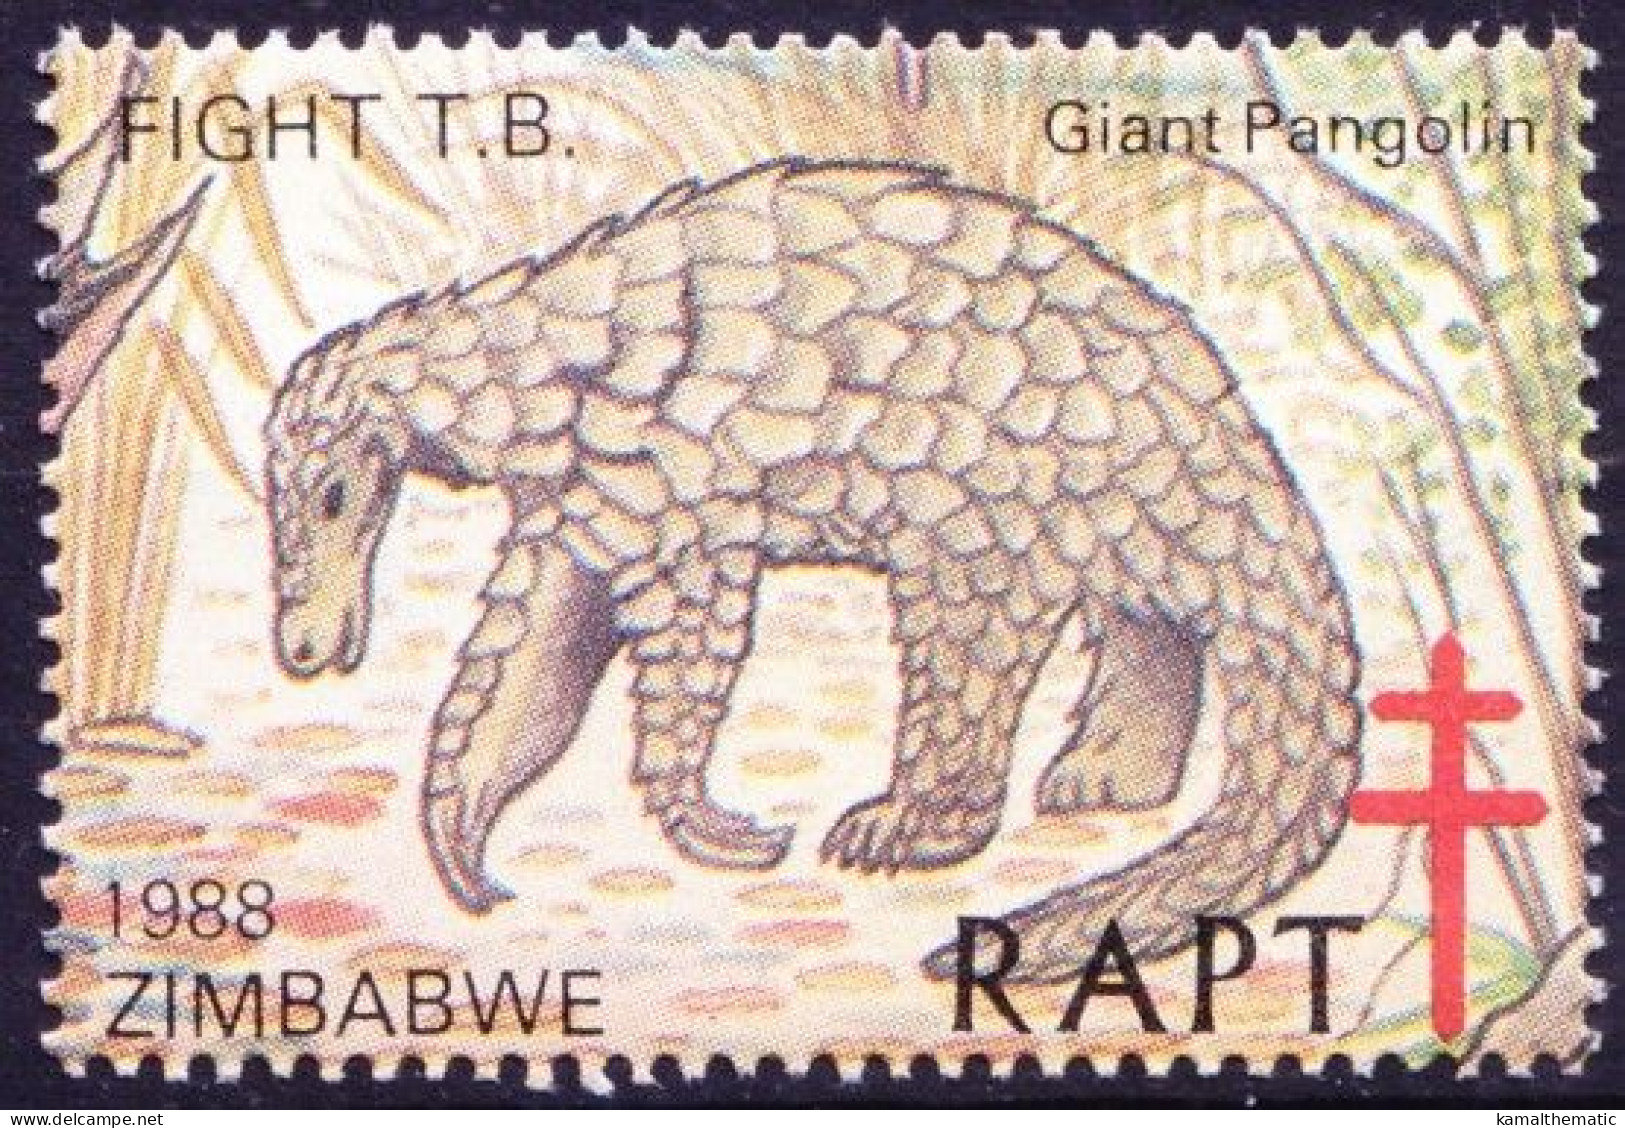 Zimbabwe 1978 MNH, Giant Pangolin Animals, Help Fight TB, Seals Medical Disease - Disease